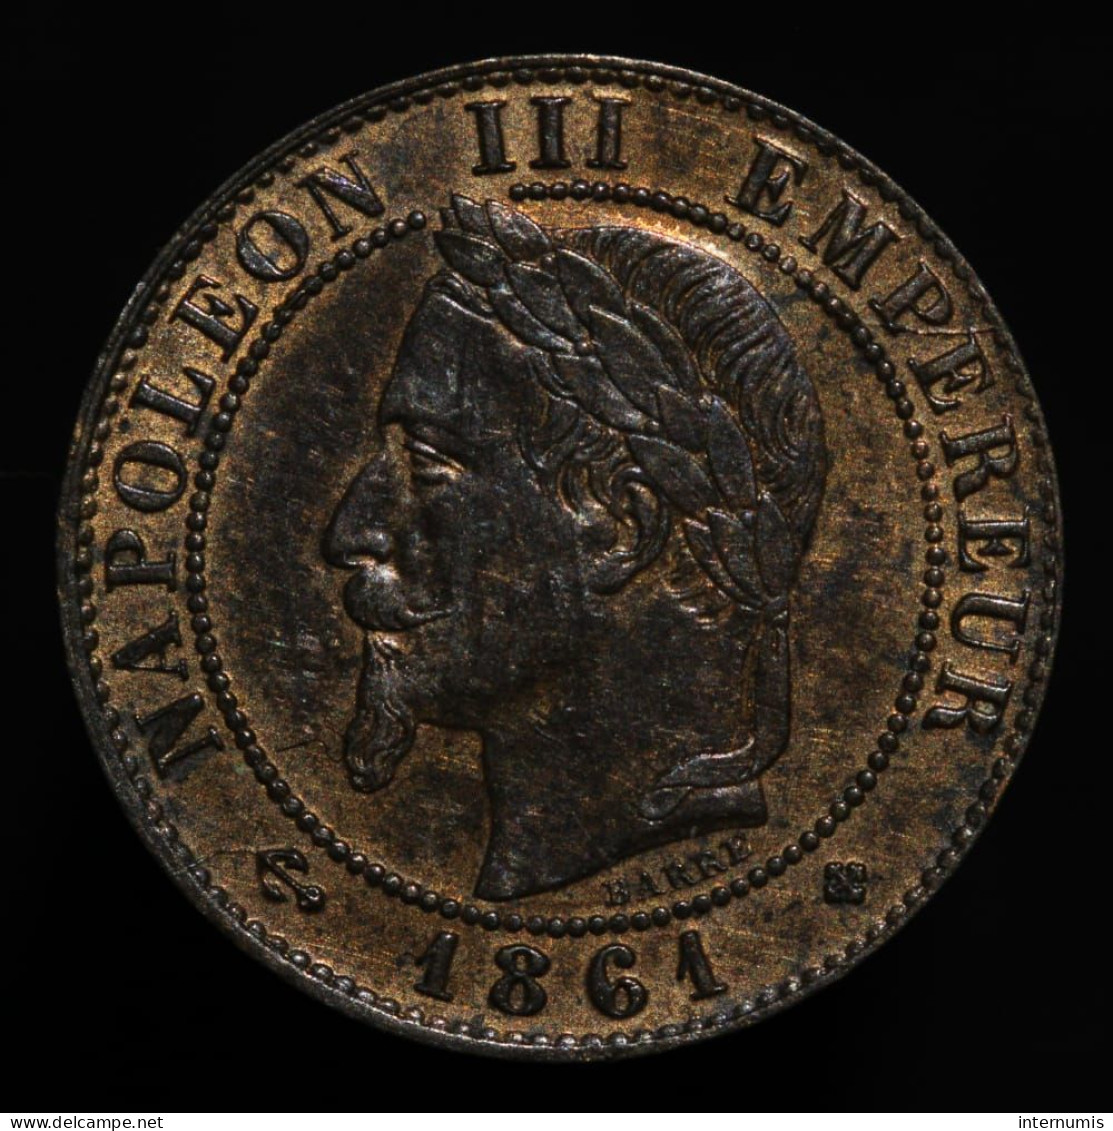 France, Napoleon III, 1 Centime, 1861, BB - Strasbourg, Bronze, SUP (AU), KM#795.2, G.87, F.103/2 - 1 Centime